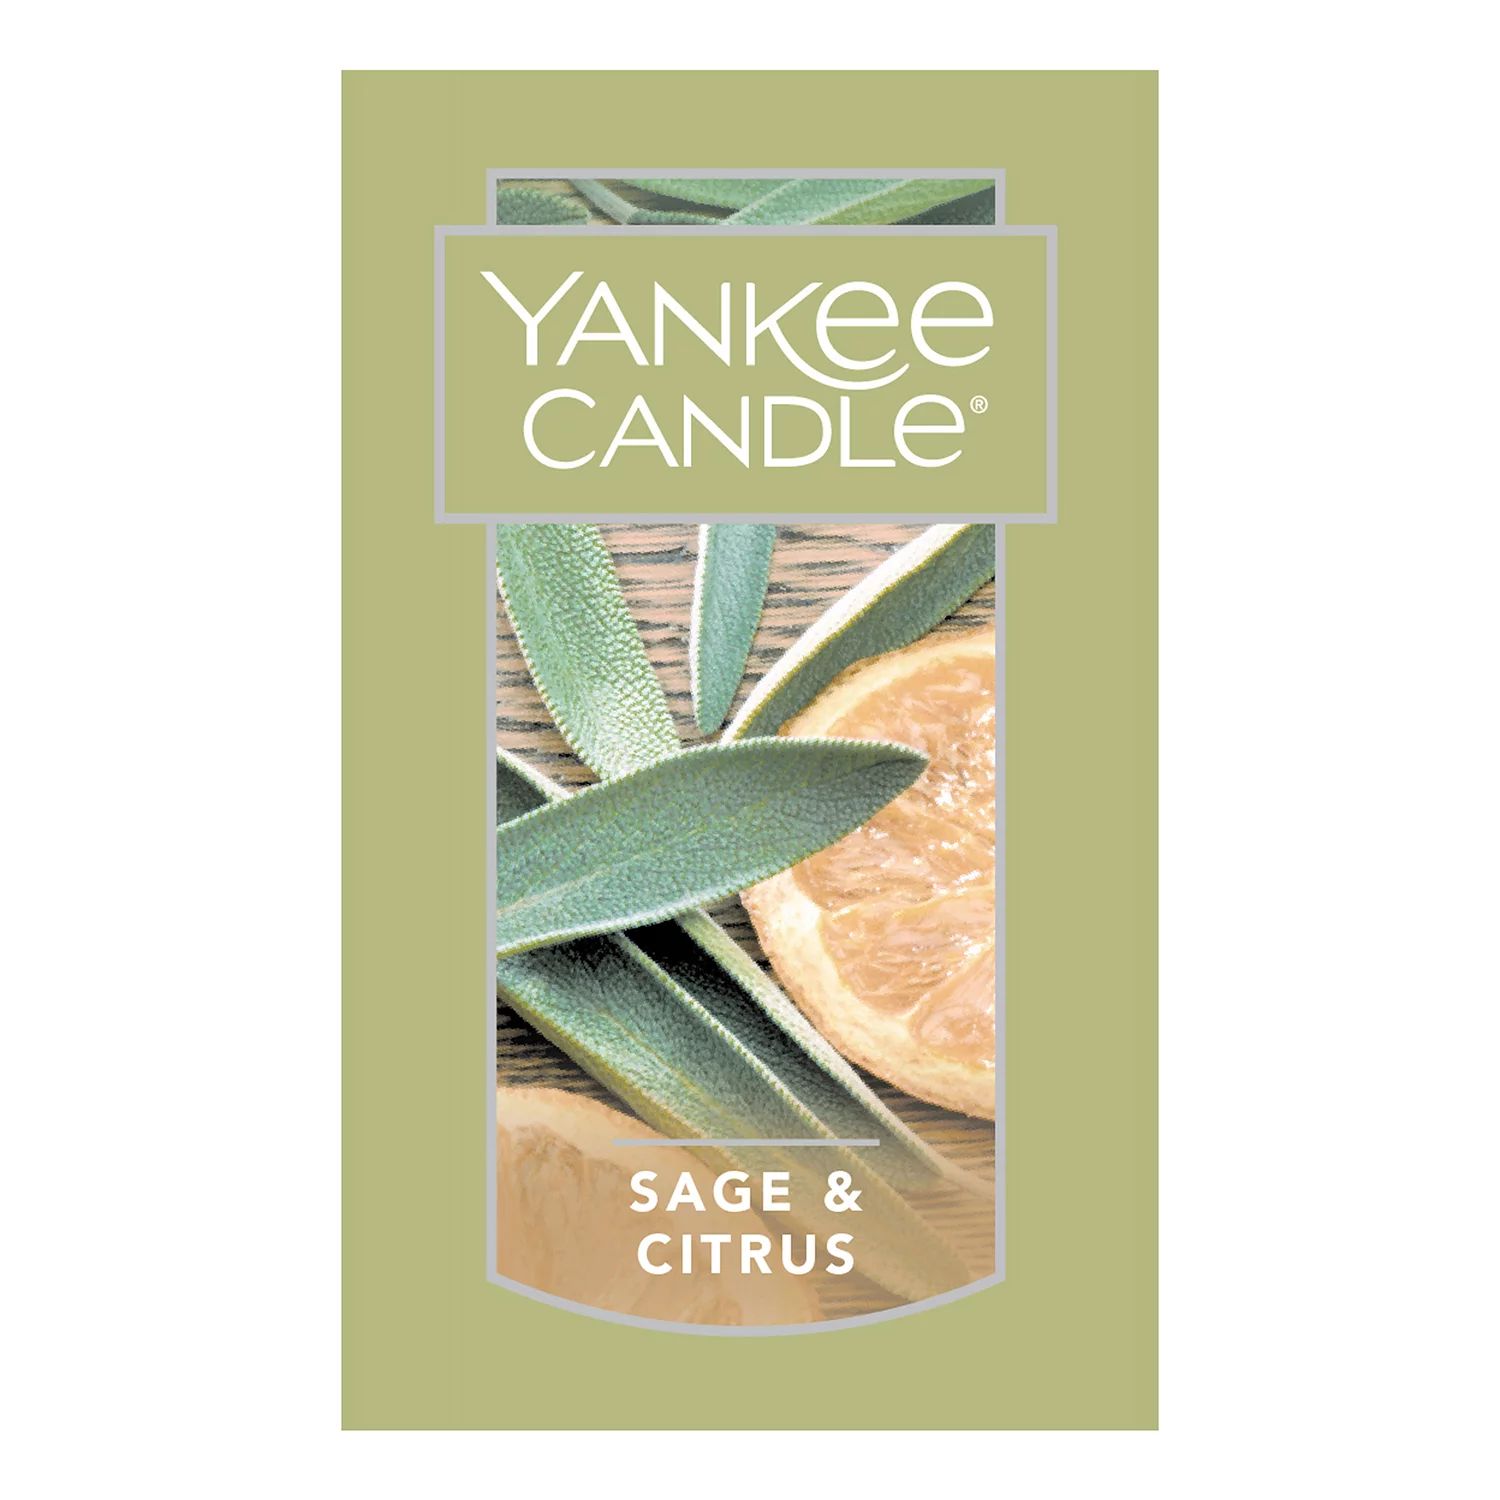 Yankee Candle Sage & Citrus, 22 унции. Большая Свеча Банка rakle candle citrus sage